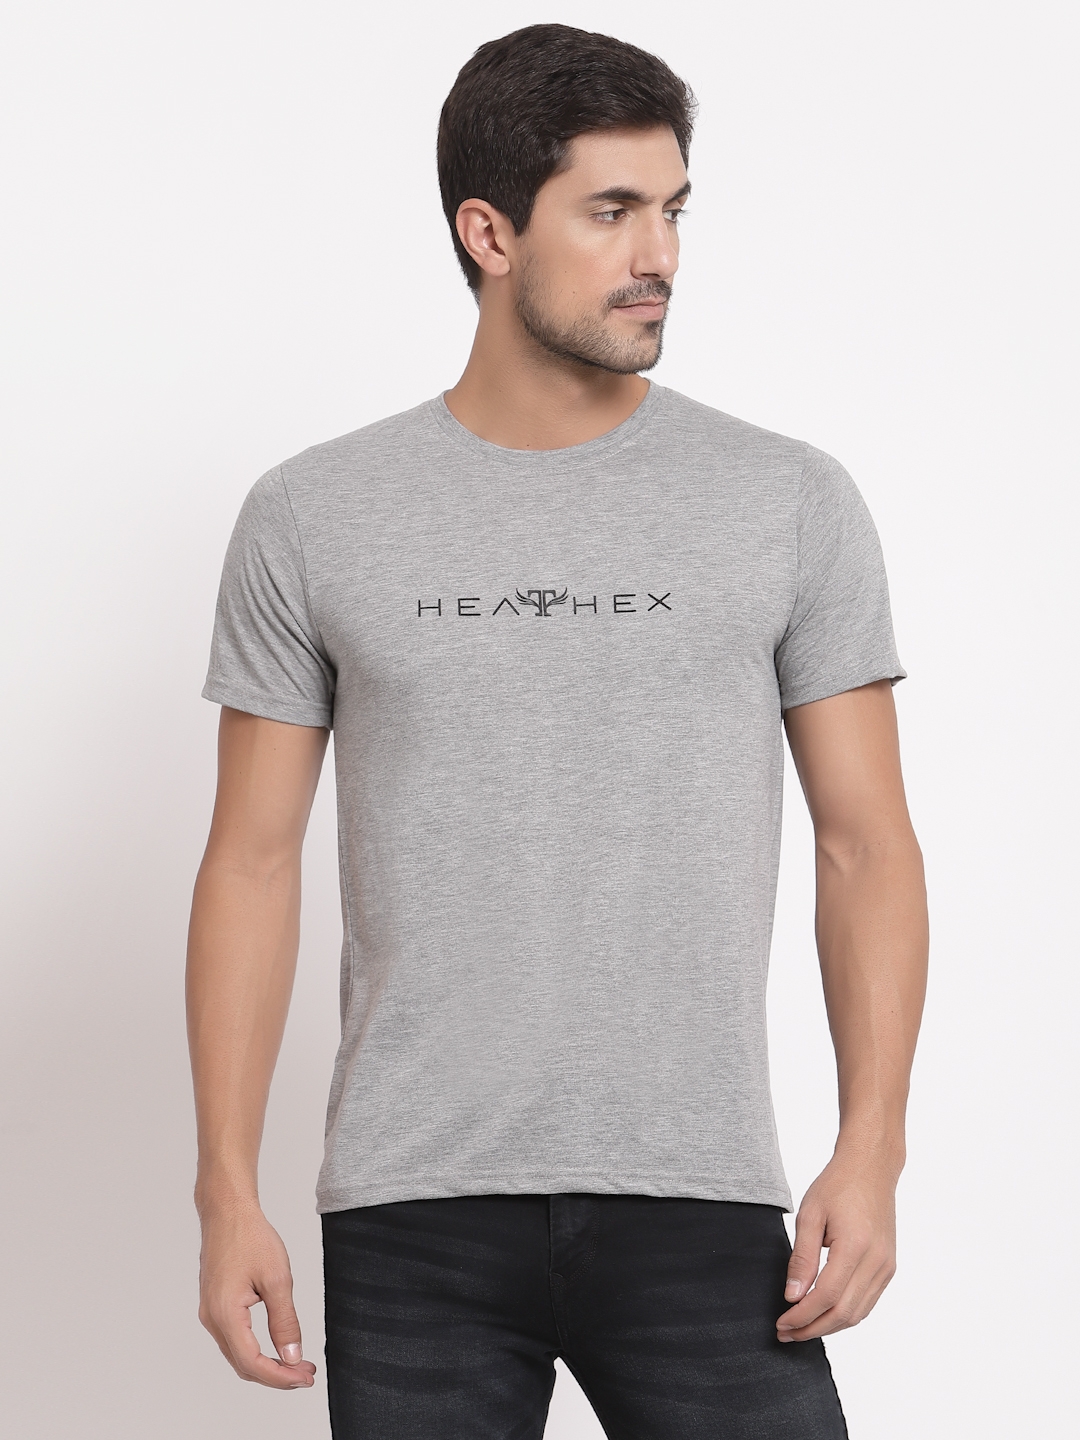 HEATHEX Cotton Blend Printed Half Sleeve Light Grey T-Shirt for Men